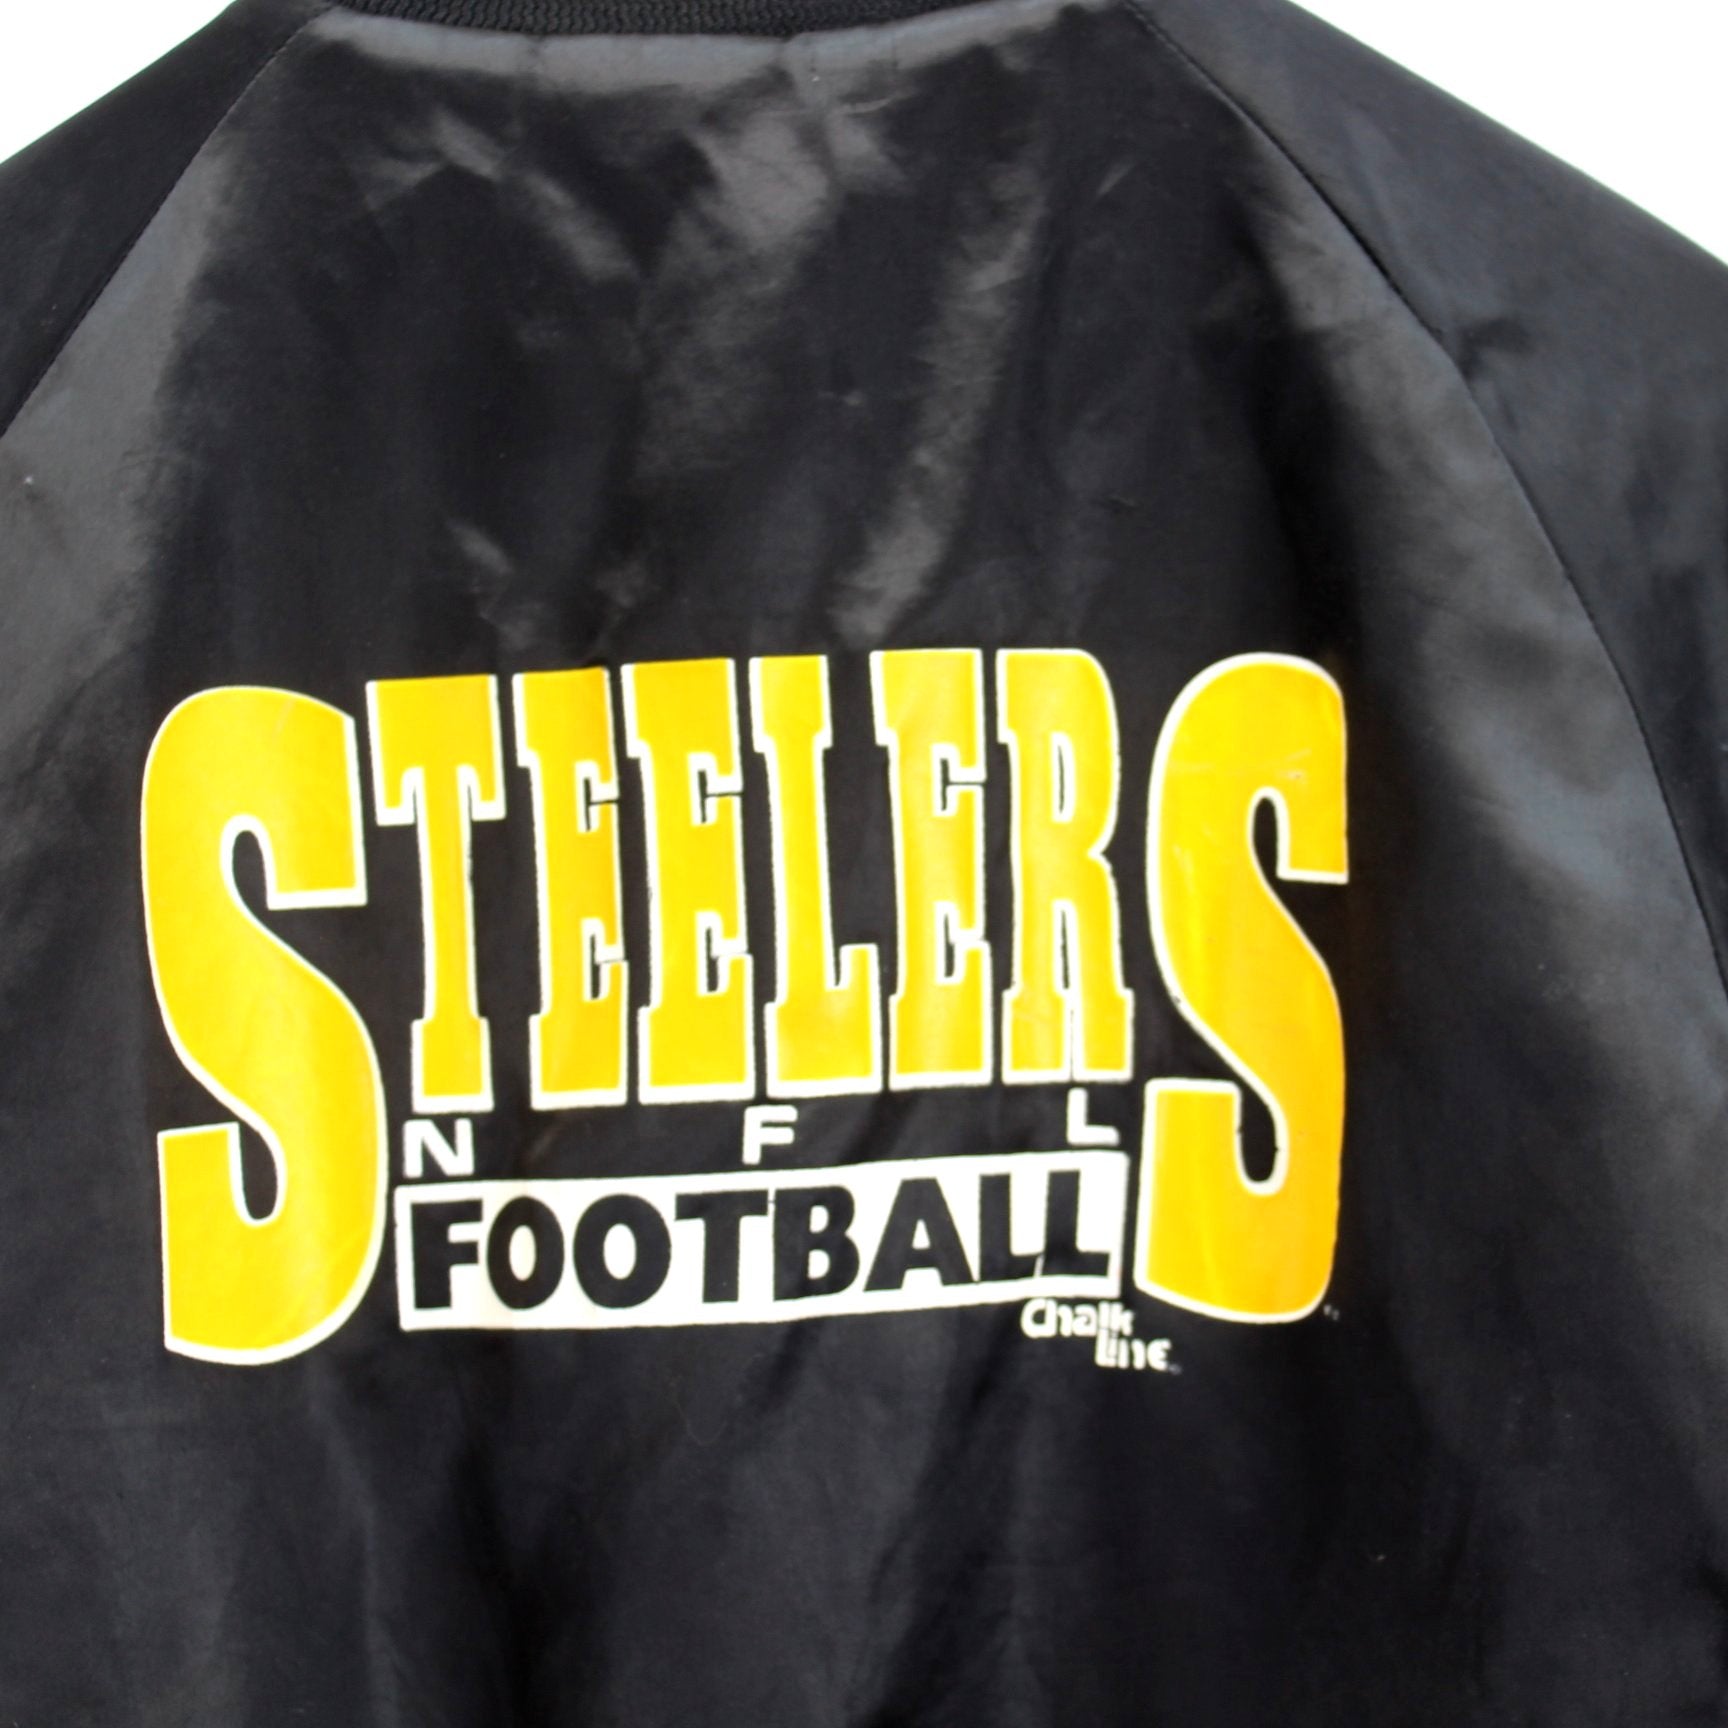 Steelers NFL Nylon Warm Up Jacket Size 18/20 Small Maker Chalk Line USA Collectible back jacket logo